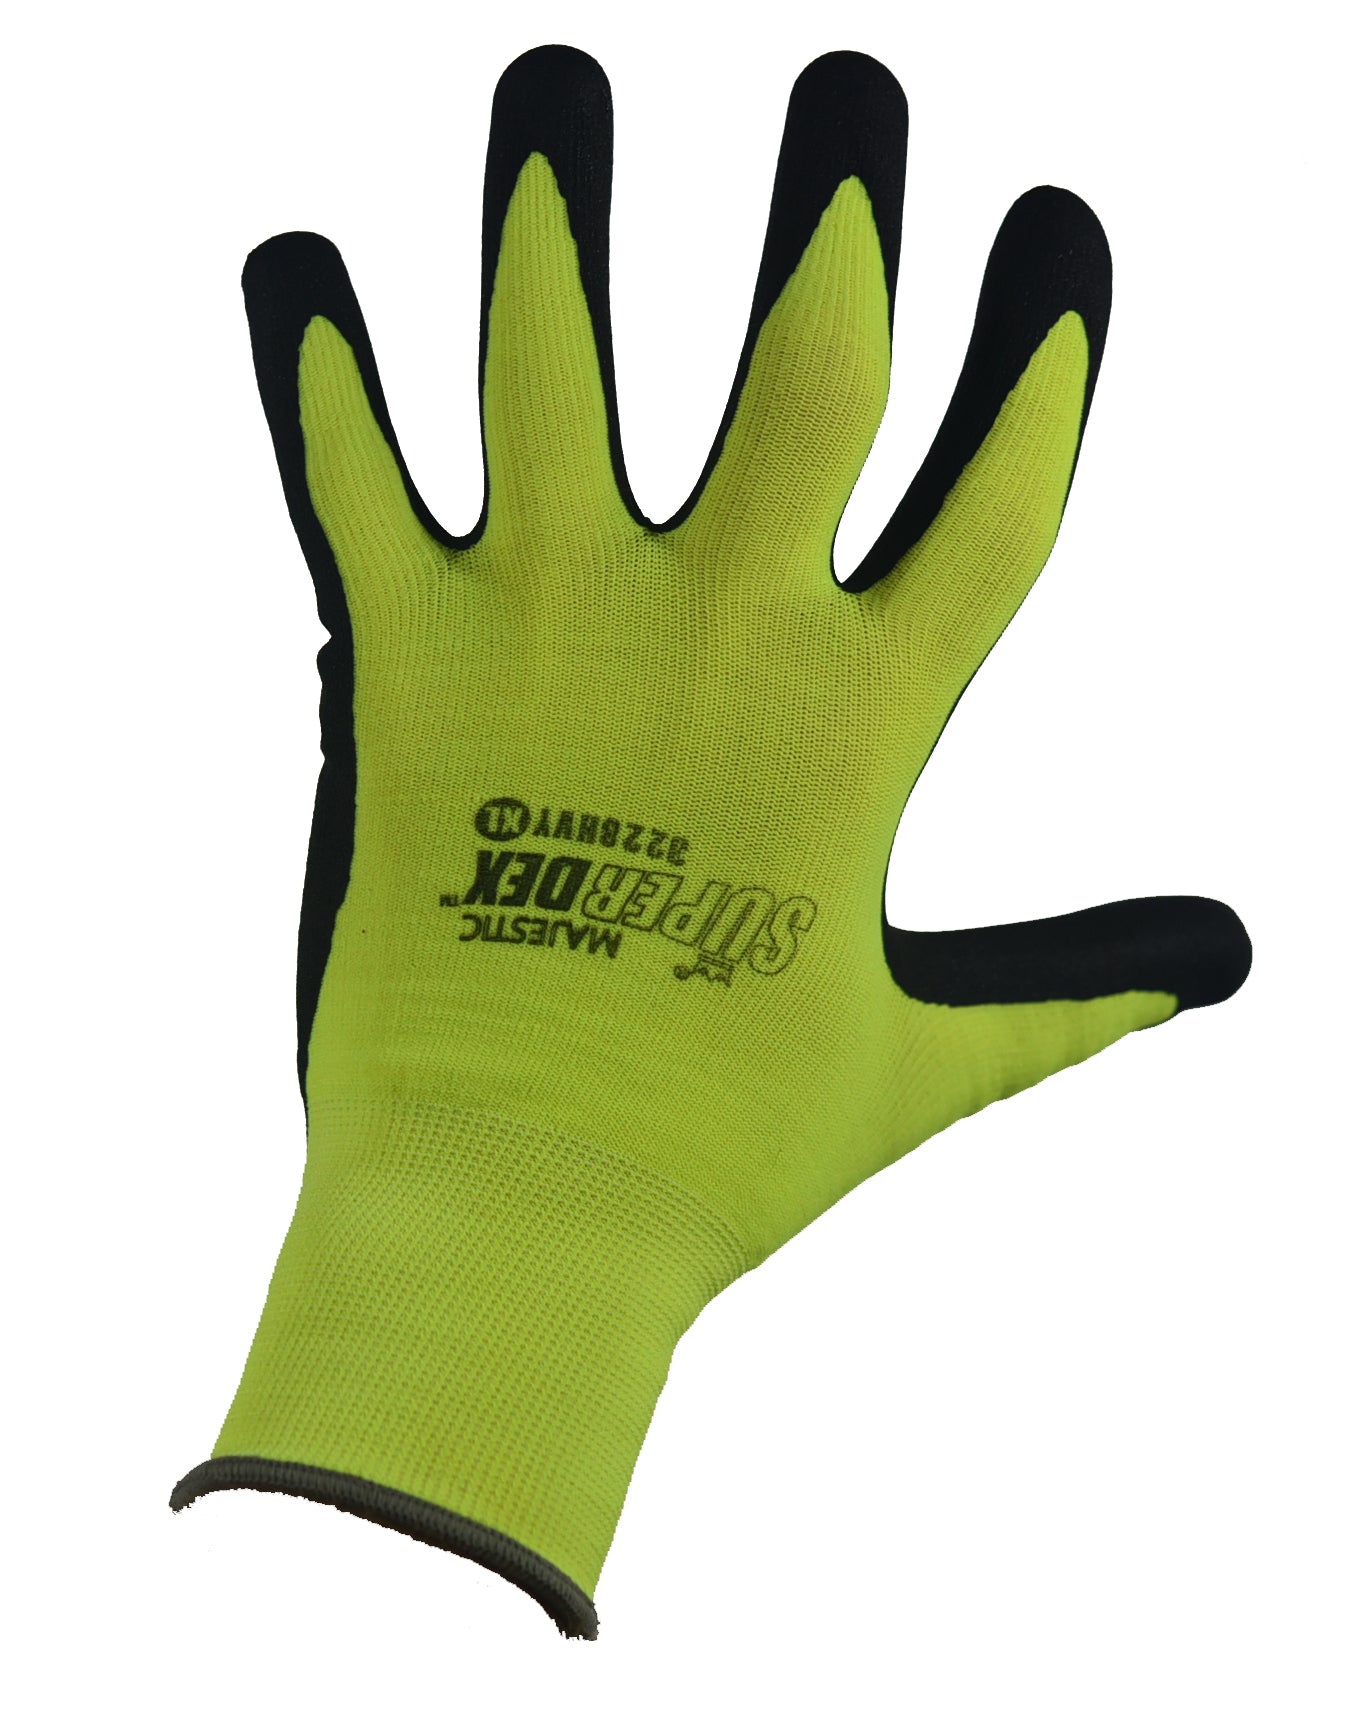 Carhartt Men's All-Purpose Nitrile Grip Gloves - Black